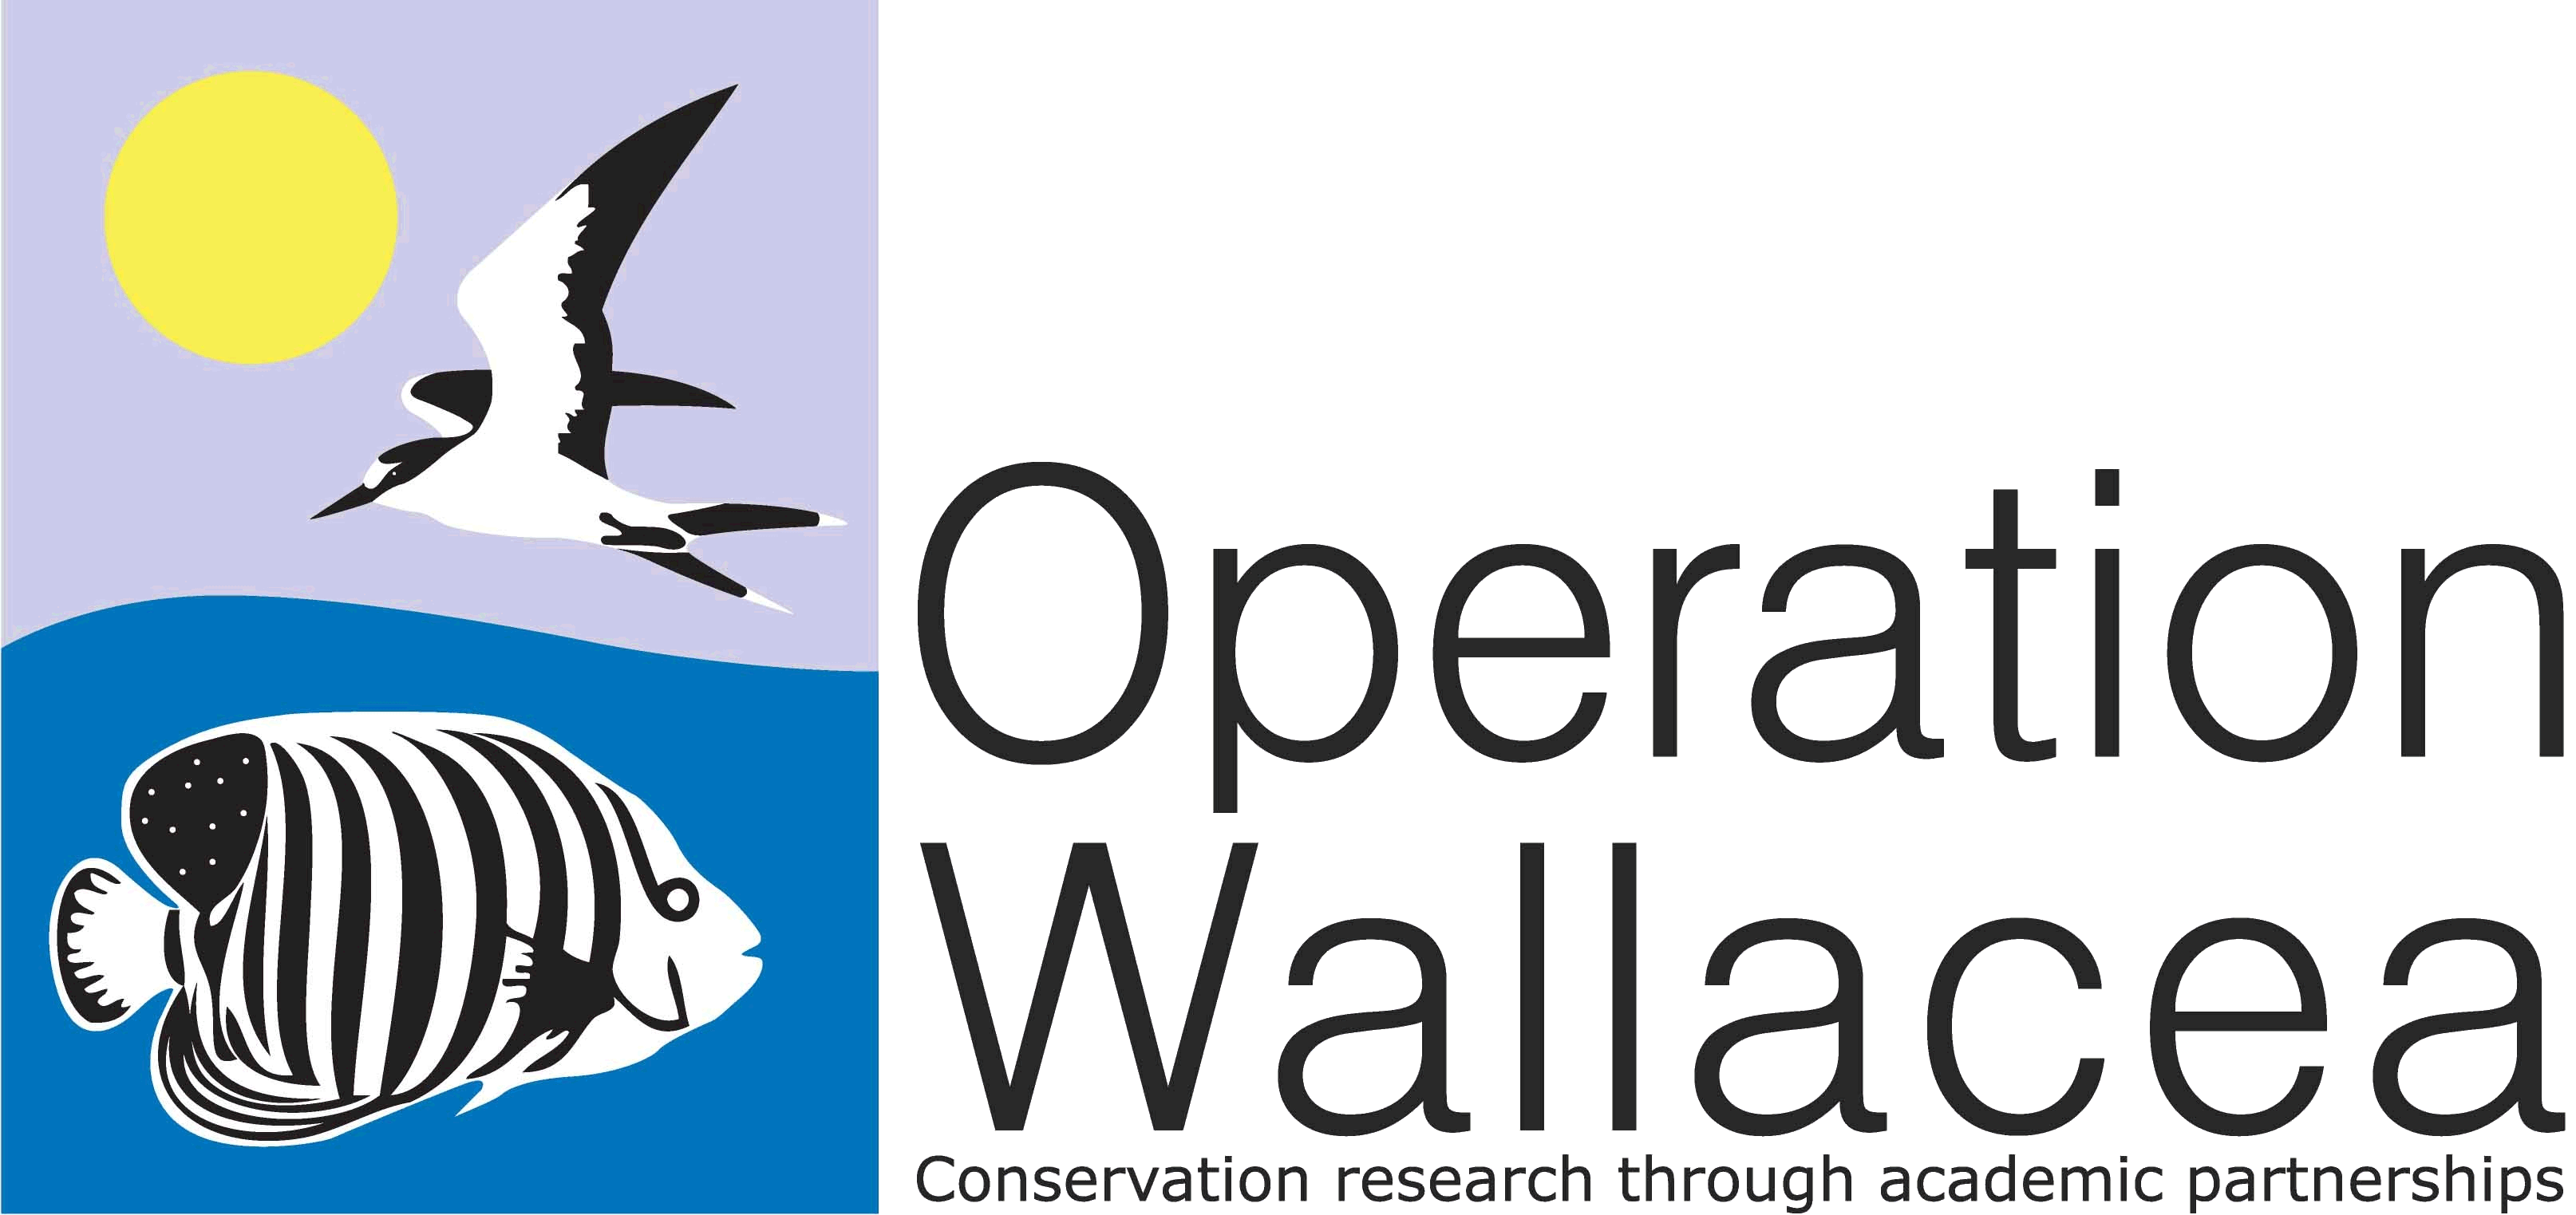 Operation Wallacea